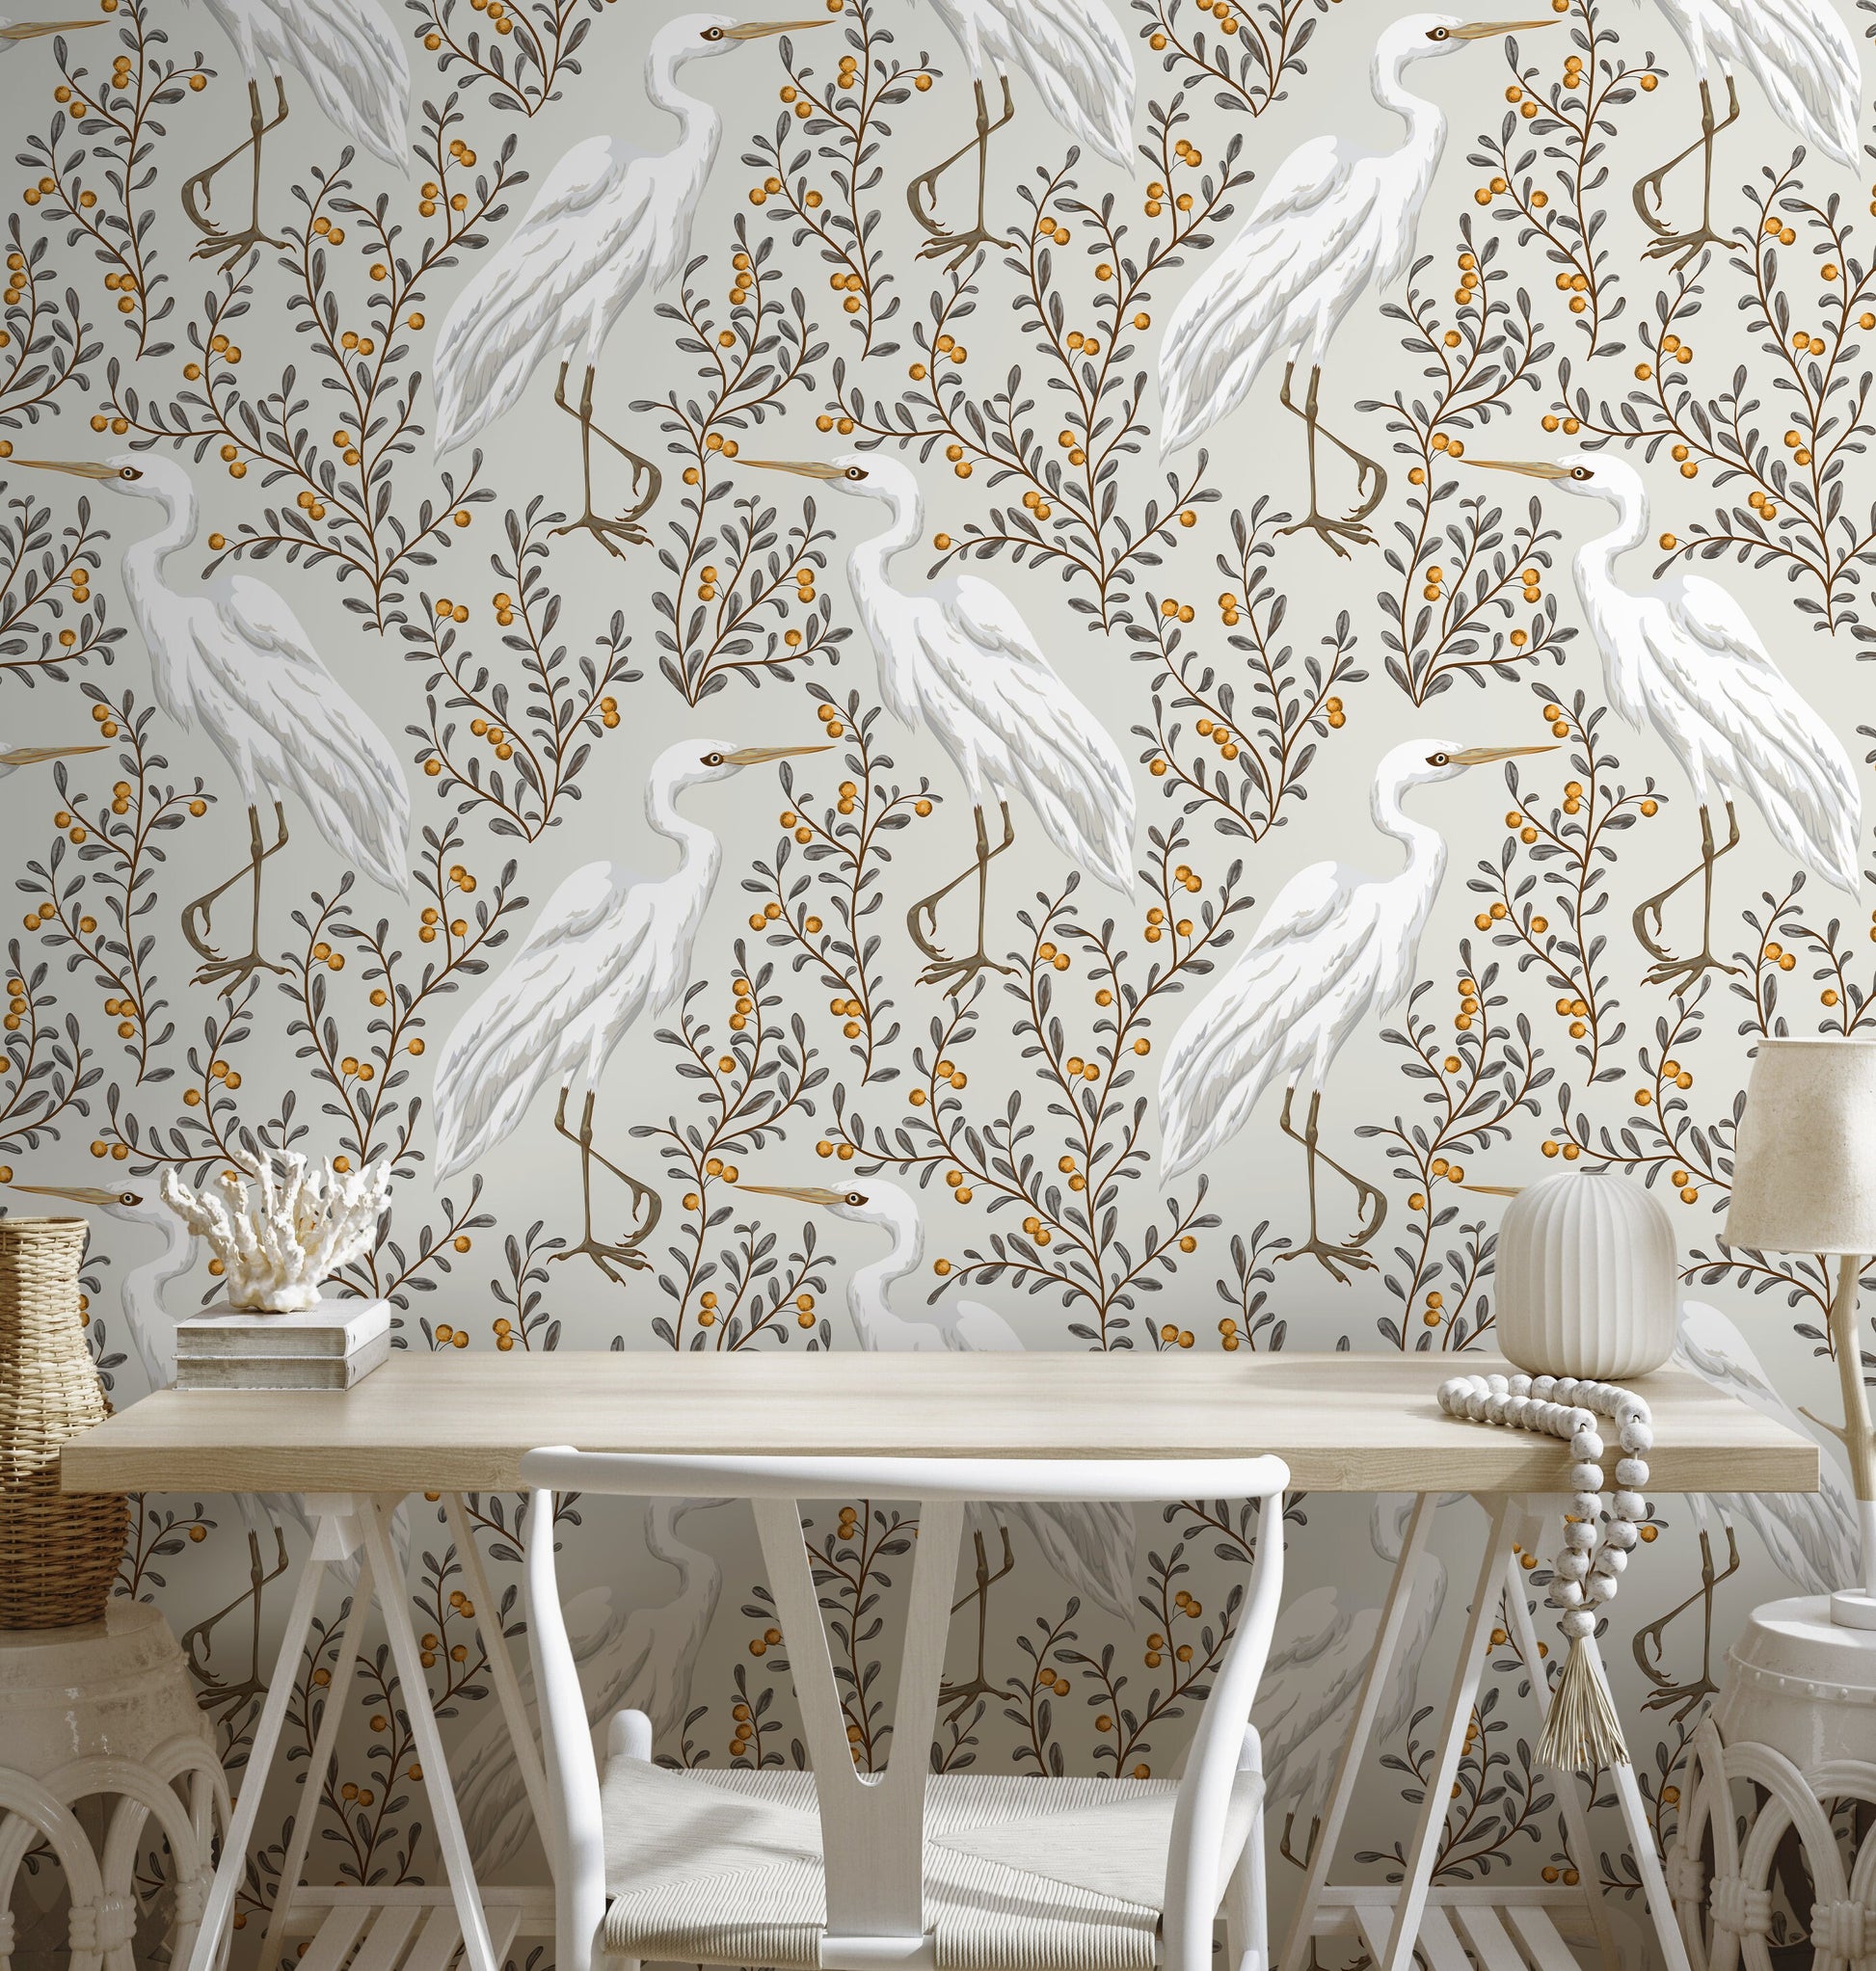 Neutral Floral Cranes Birds Wallpaper / Peel and Stick Wallpaper Removable Wallpaper Home Decor Wall Art Wall Decor Room Decor - D073